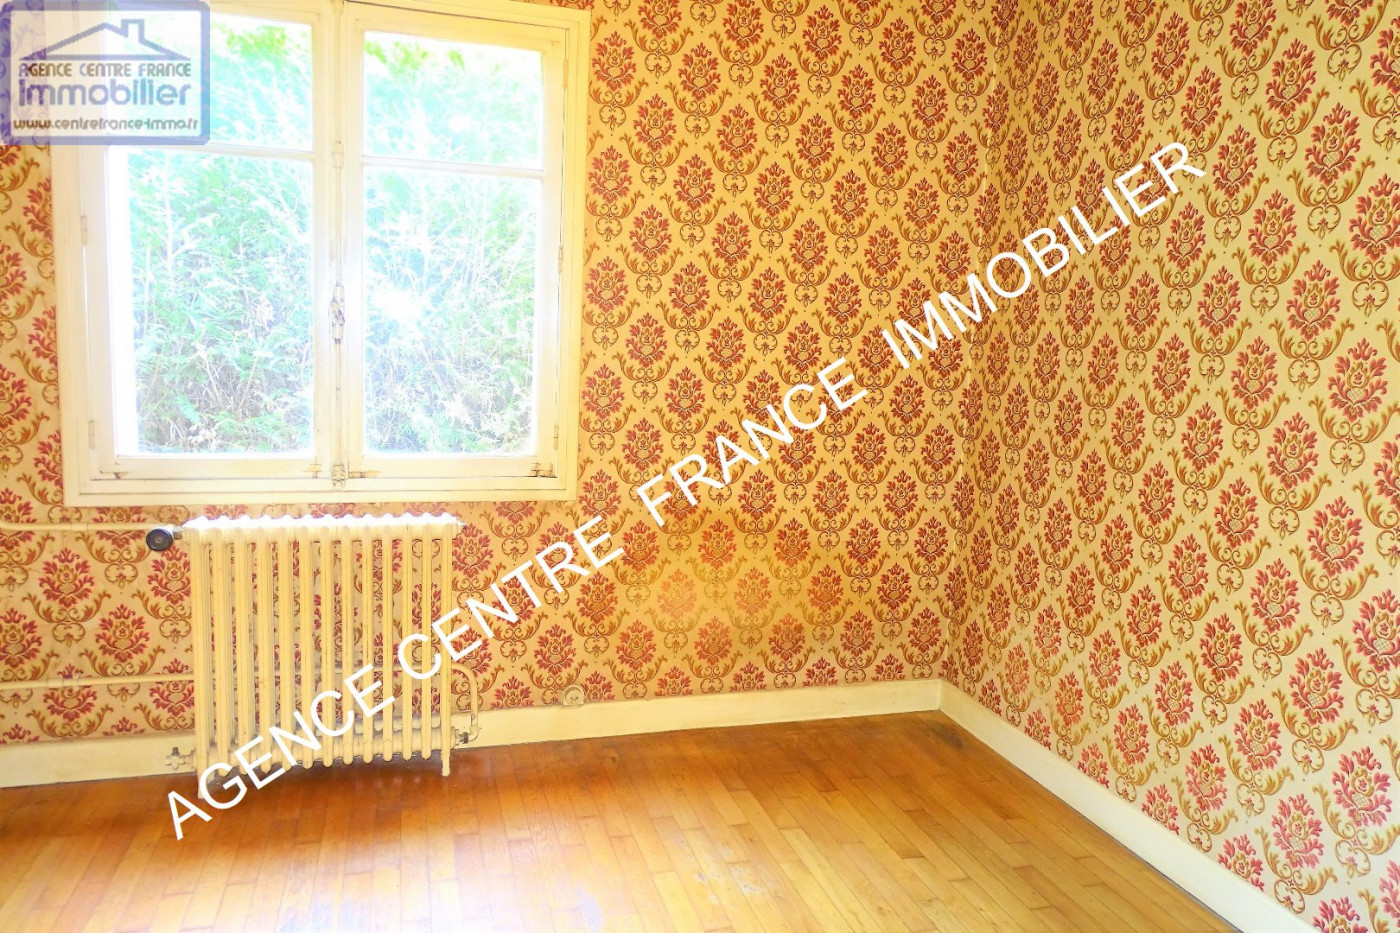 A vendre  Bourges | Réf 030011489 - Agence centre france immobilier